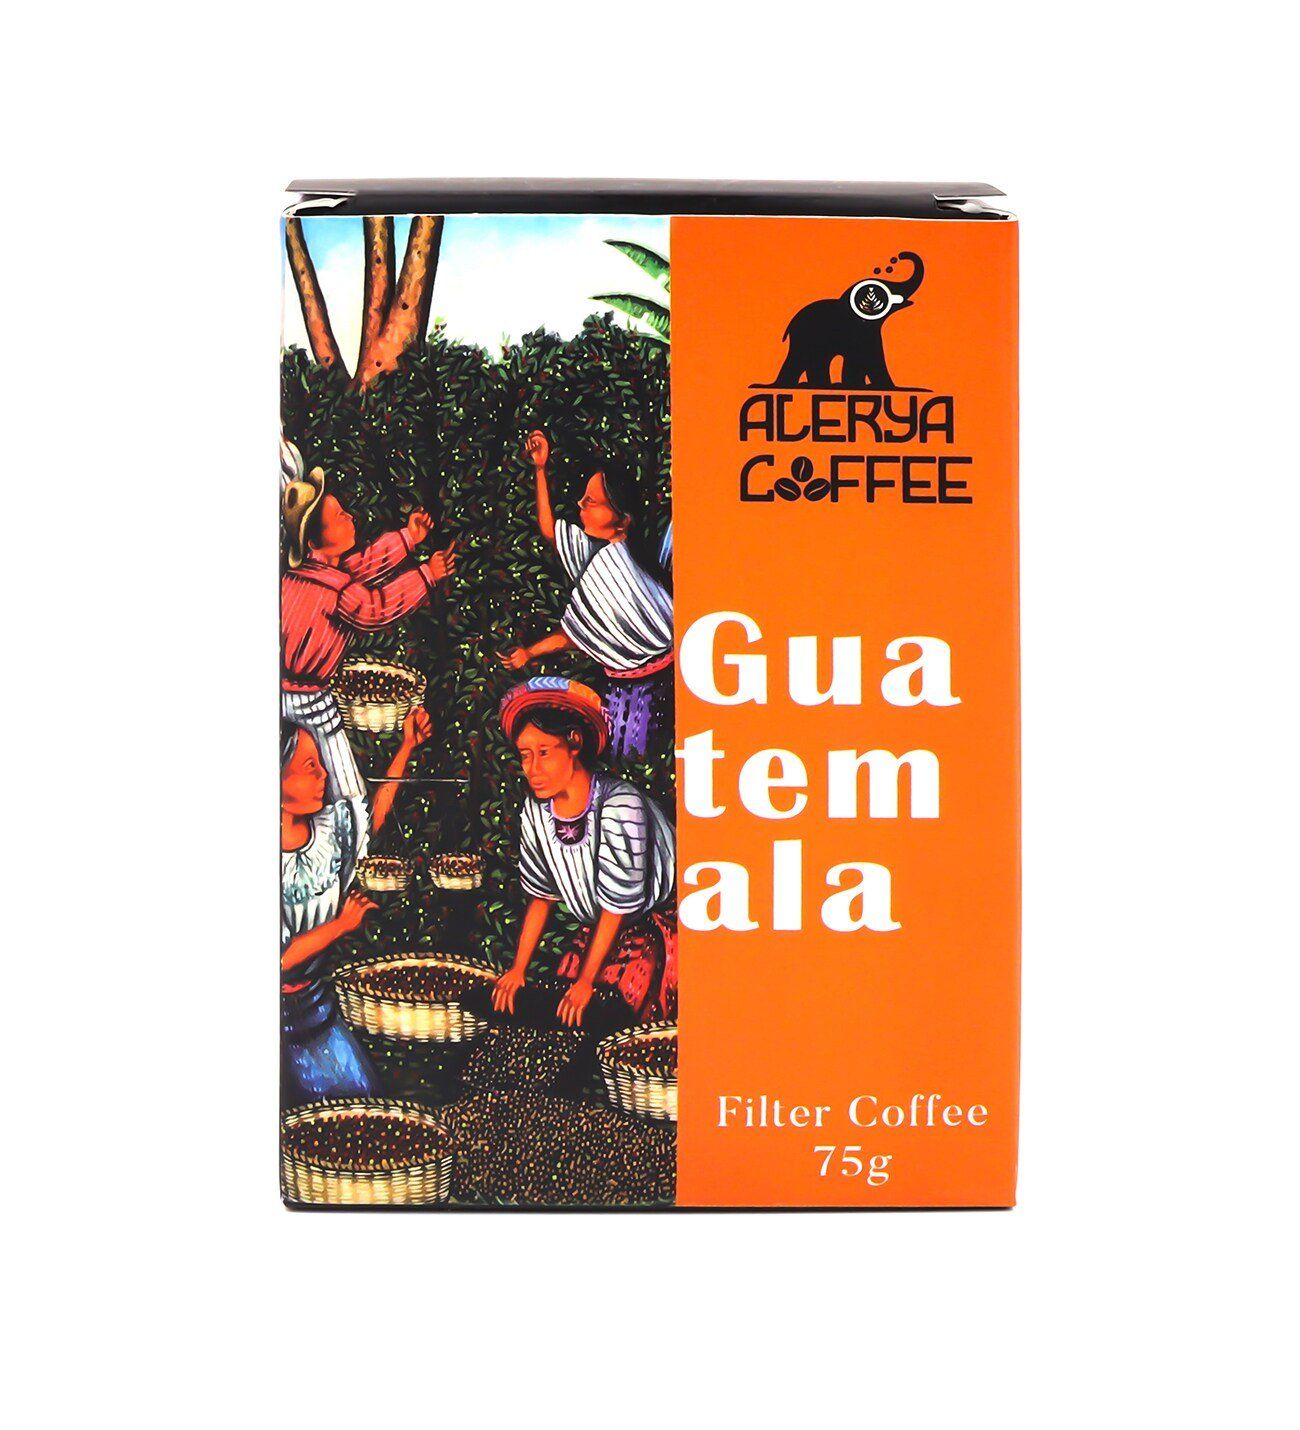 Babalar Gününe Özel Cam Kahve Demleme Karafı & Siyah Mat Kupa & Alerya Guatemala Filtre Kahve Hediye Seti #3